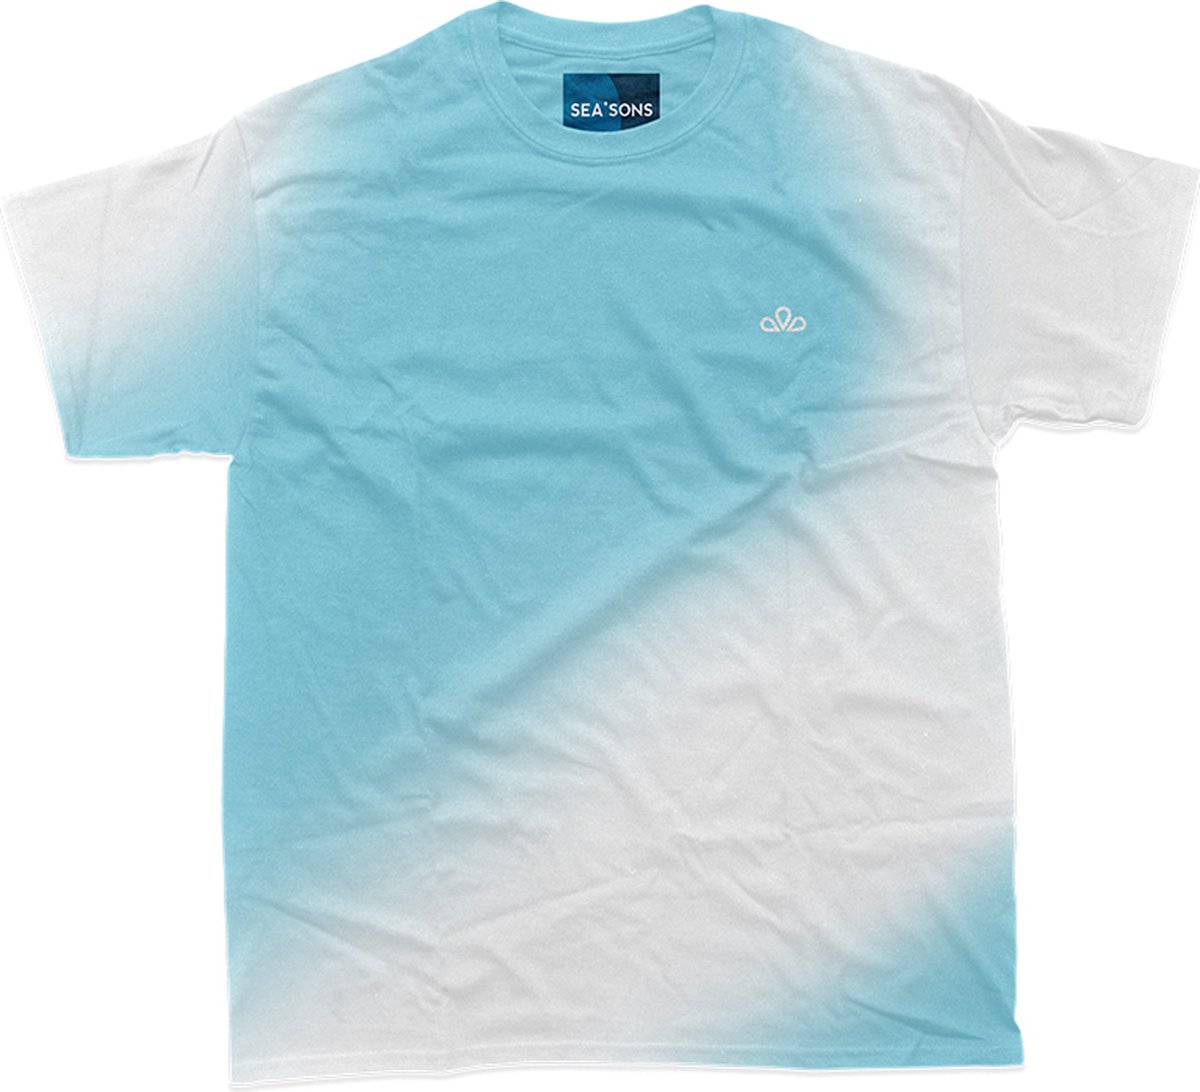 Sea'sons Official - Kleurveranderend - T-Shirt - Blauw-Wit - Maat L